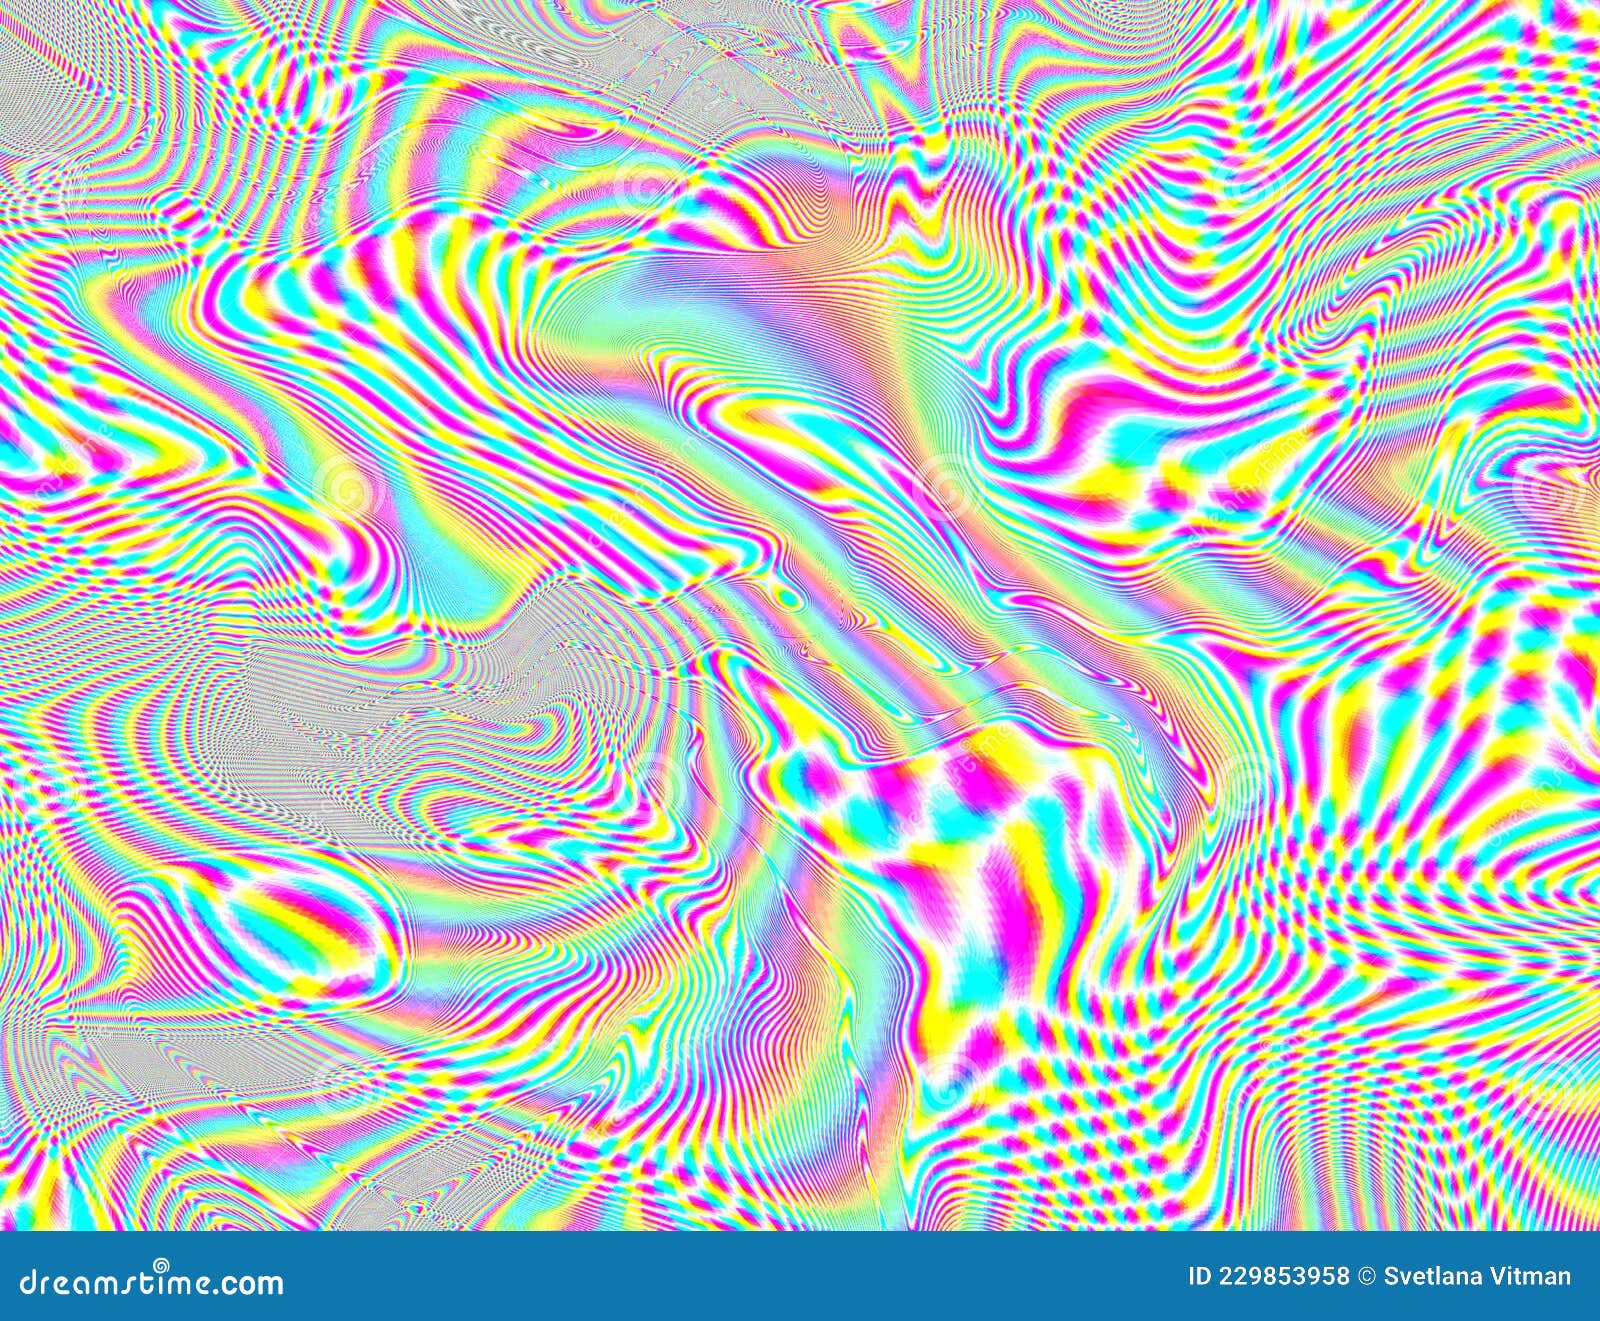 Wallpaper  illustration abstract cartoon Make Acid ART psychedelic  art 1680x1050  UberLost  119888  HD Wallpapers  WallHere